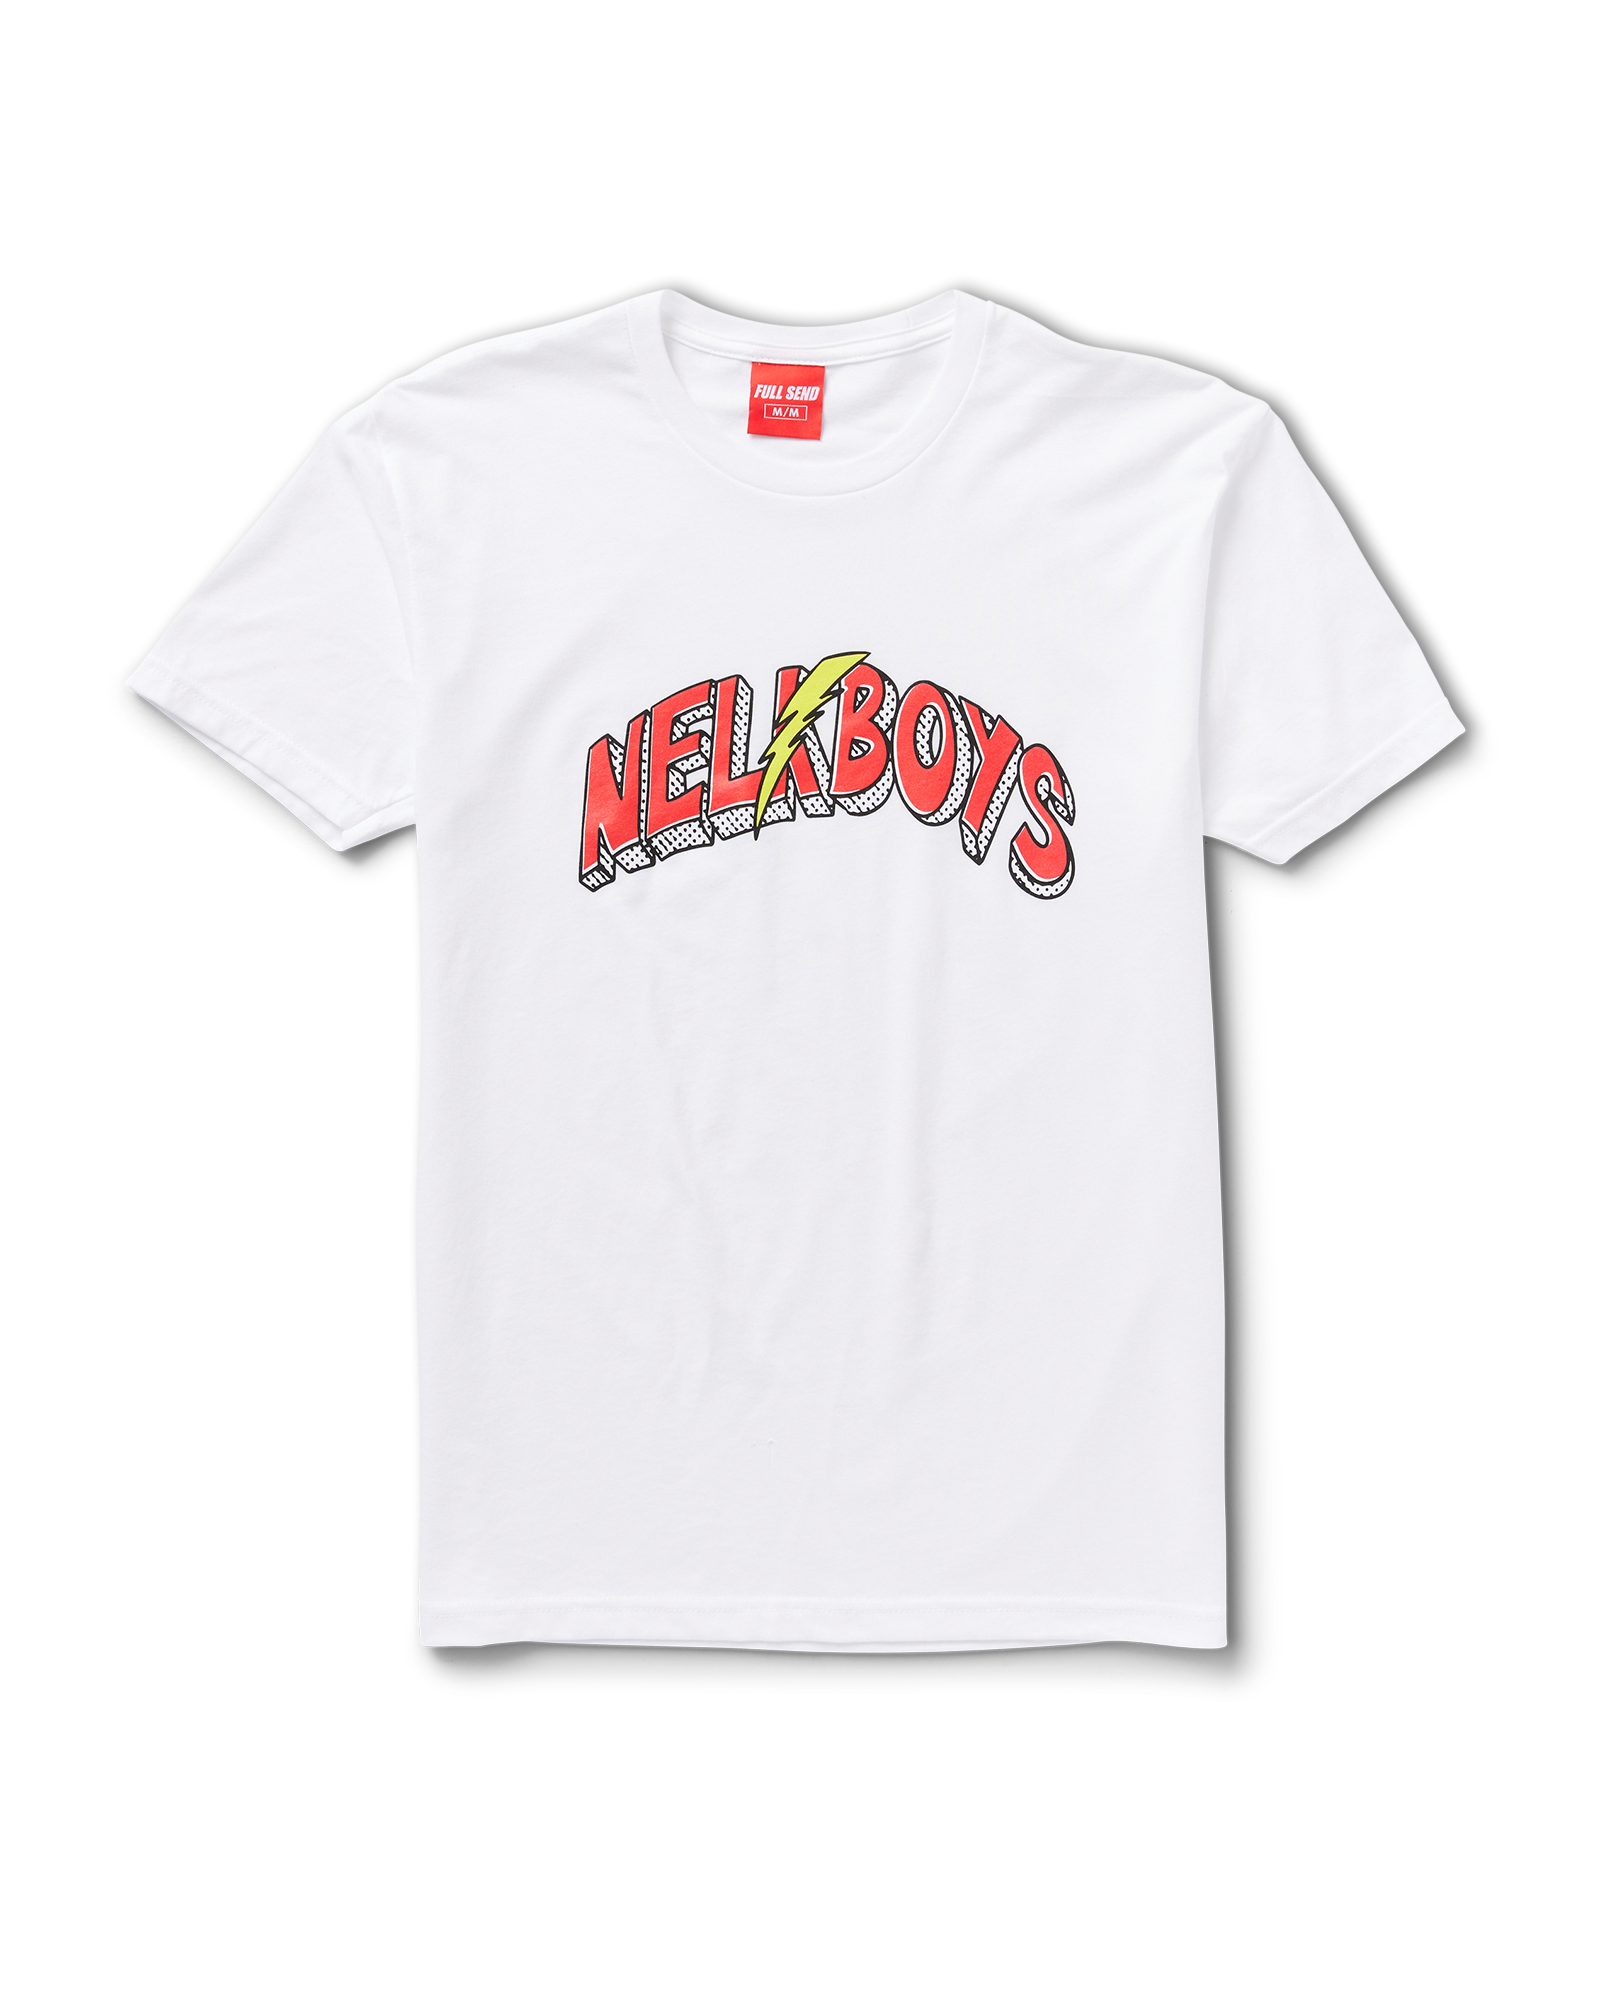 Tシャツ/カットソー(半袖/袖なし)トラヴィス・スコット jackboys shatter shirts シャツ M -  Tシャツ/カットソー(半袖/袖なし)